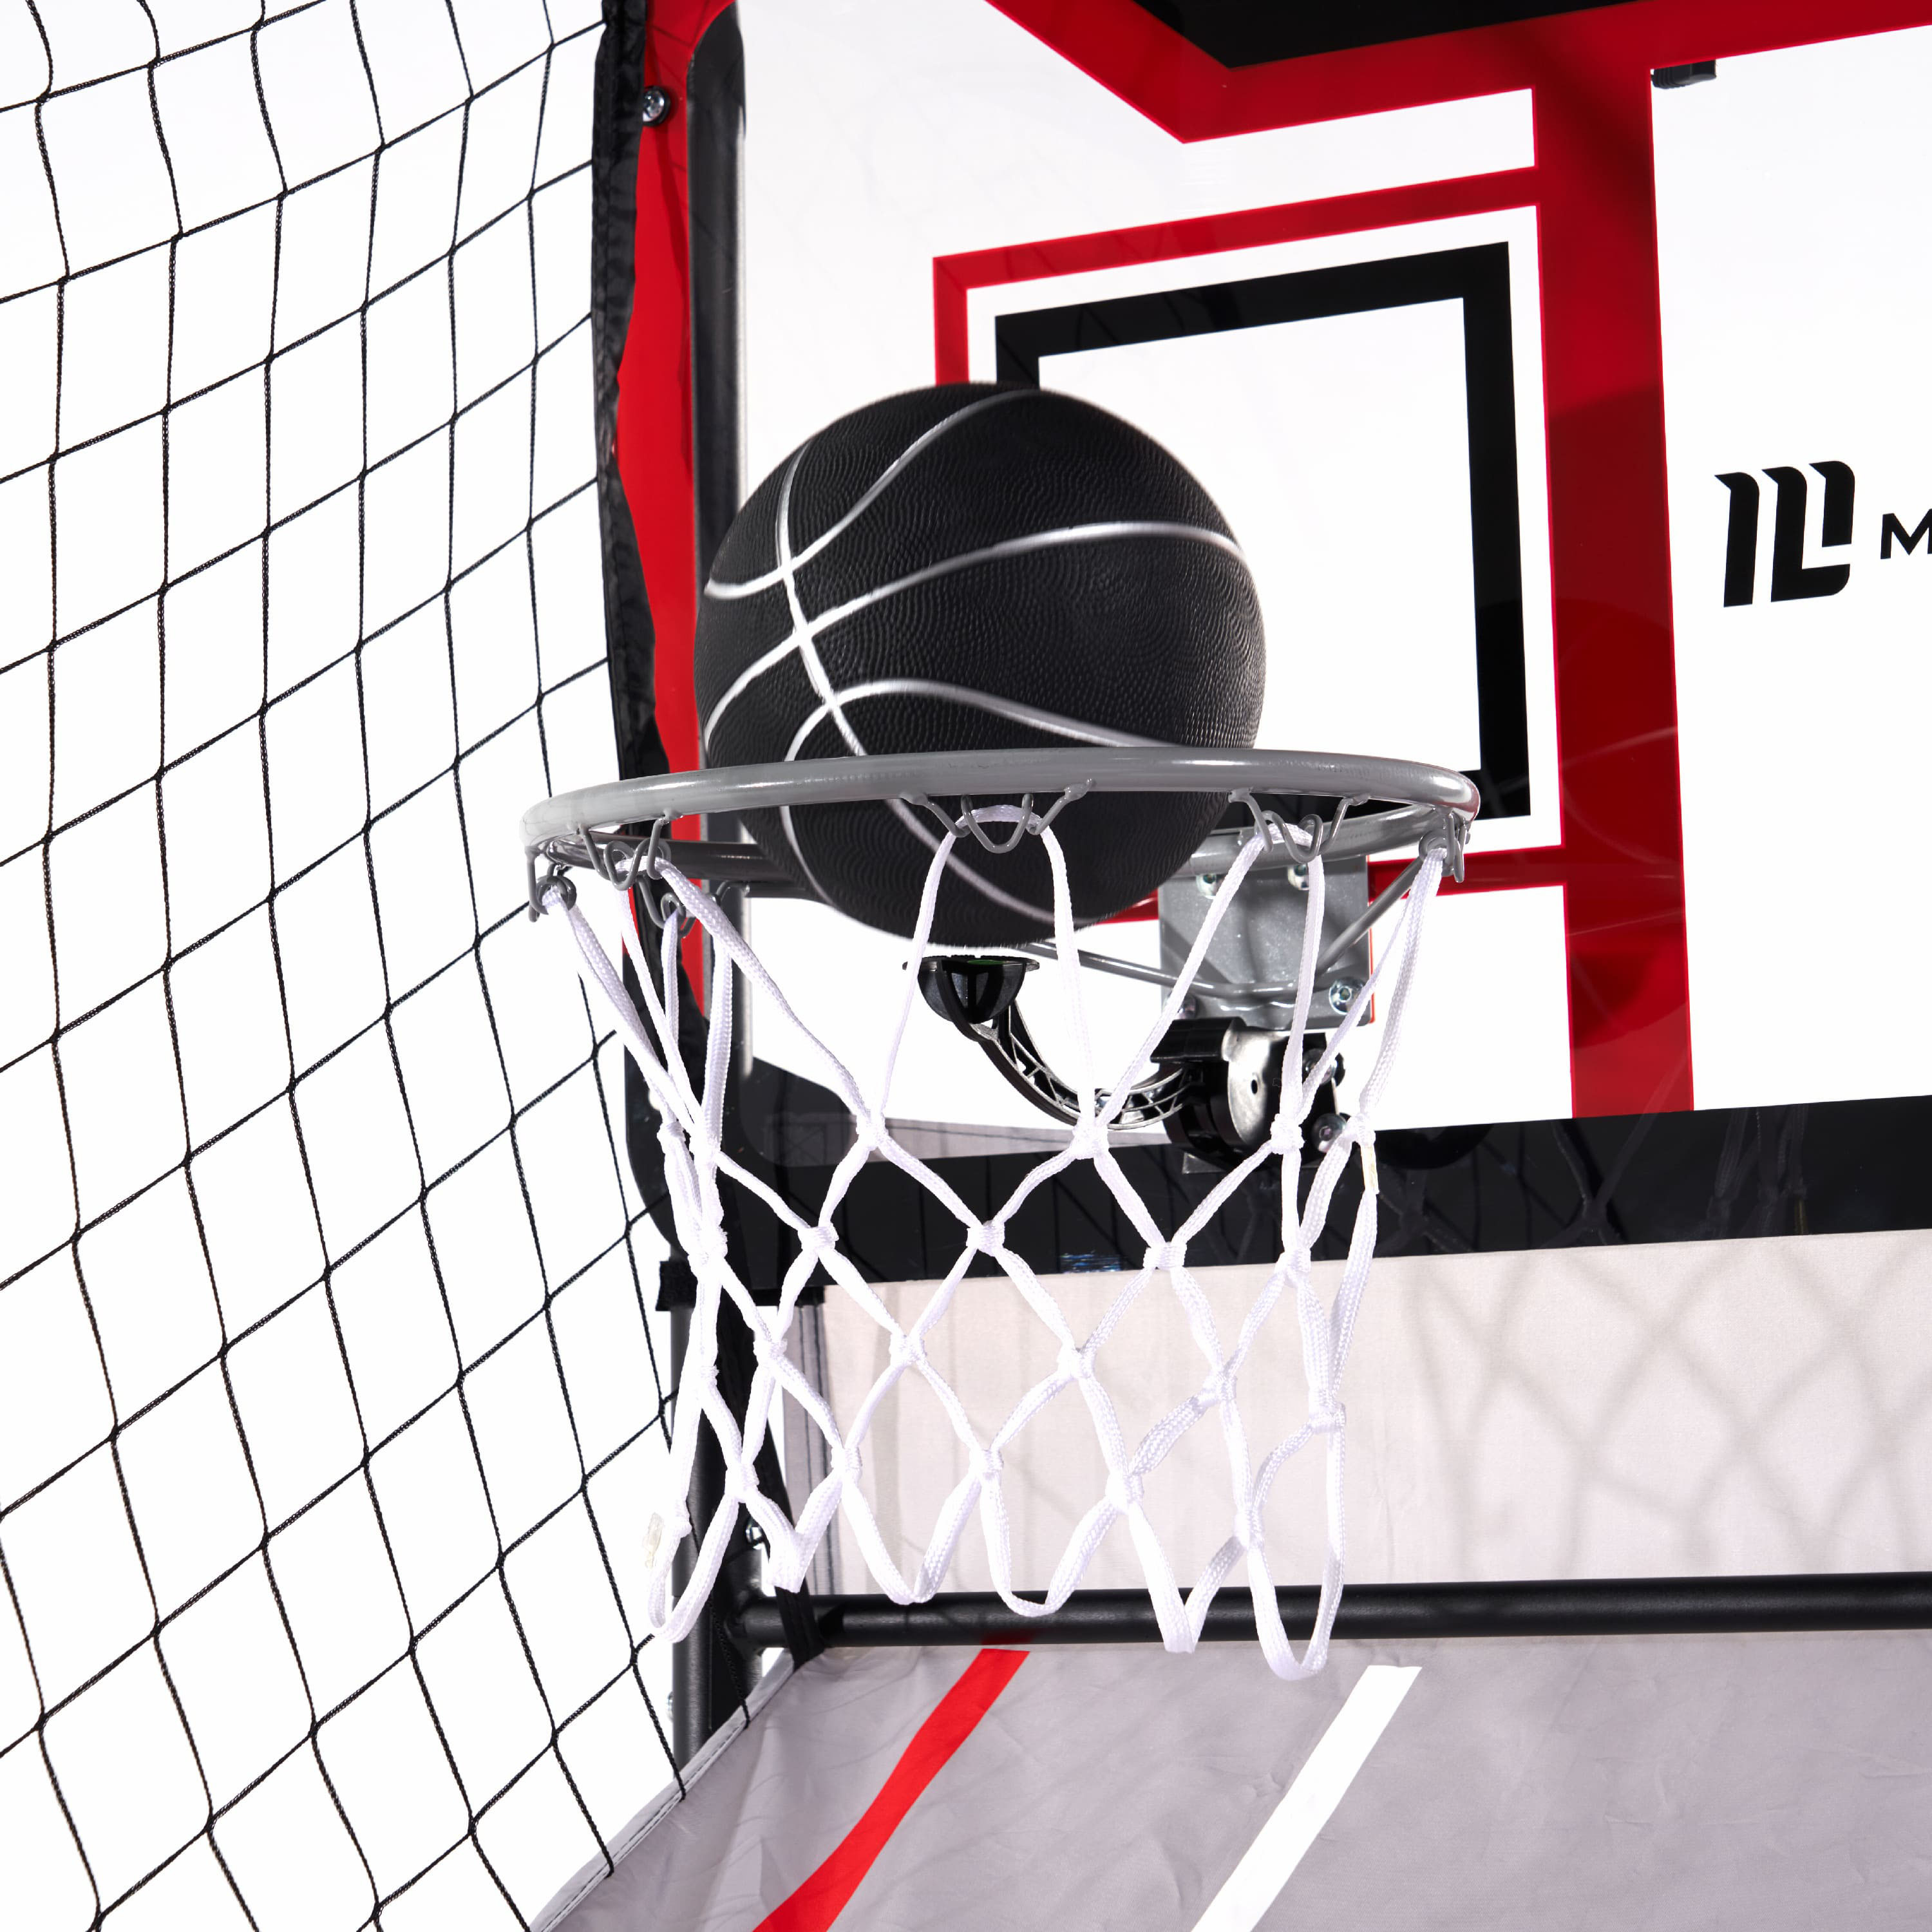 ESPN EZ-Fold 2-Player Arcade Basketball Game - MD Sports